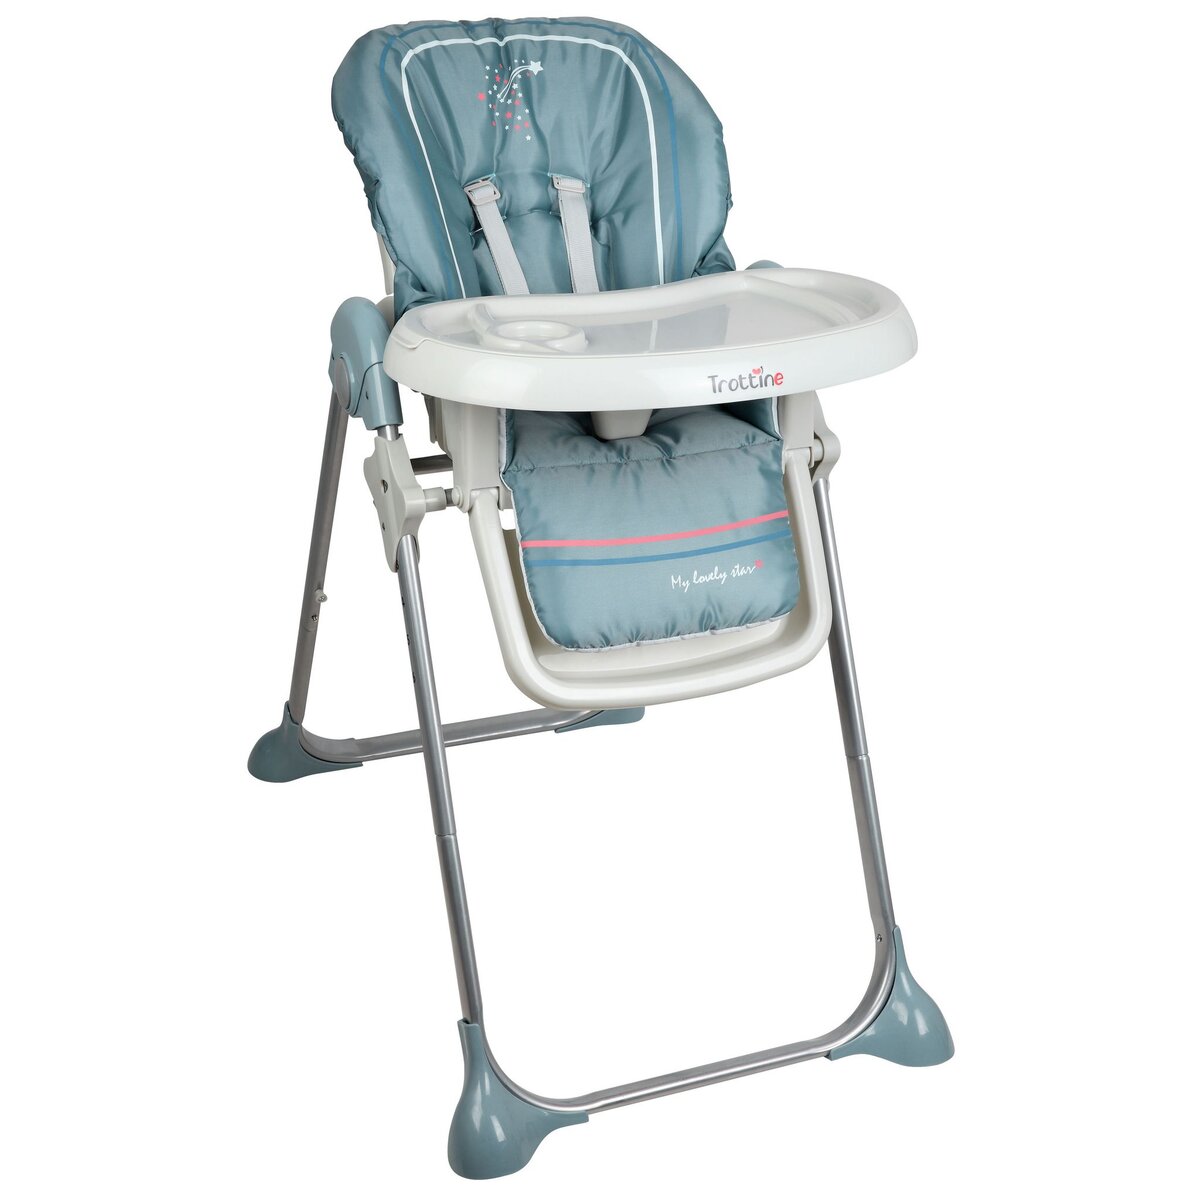 TROTTINE Chaise haute bébé multipositions inclinable Faraday